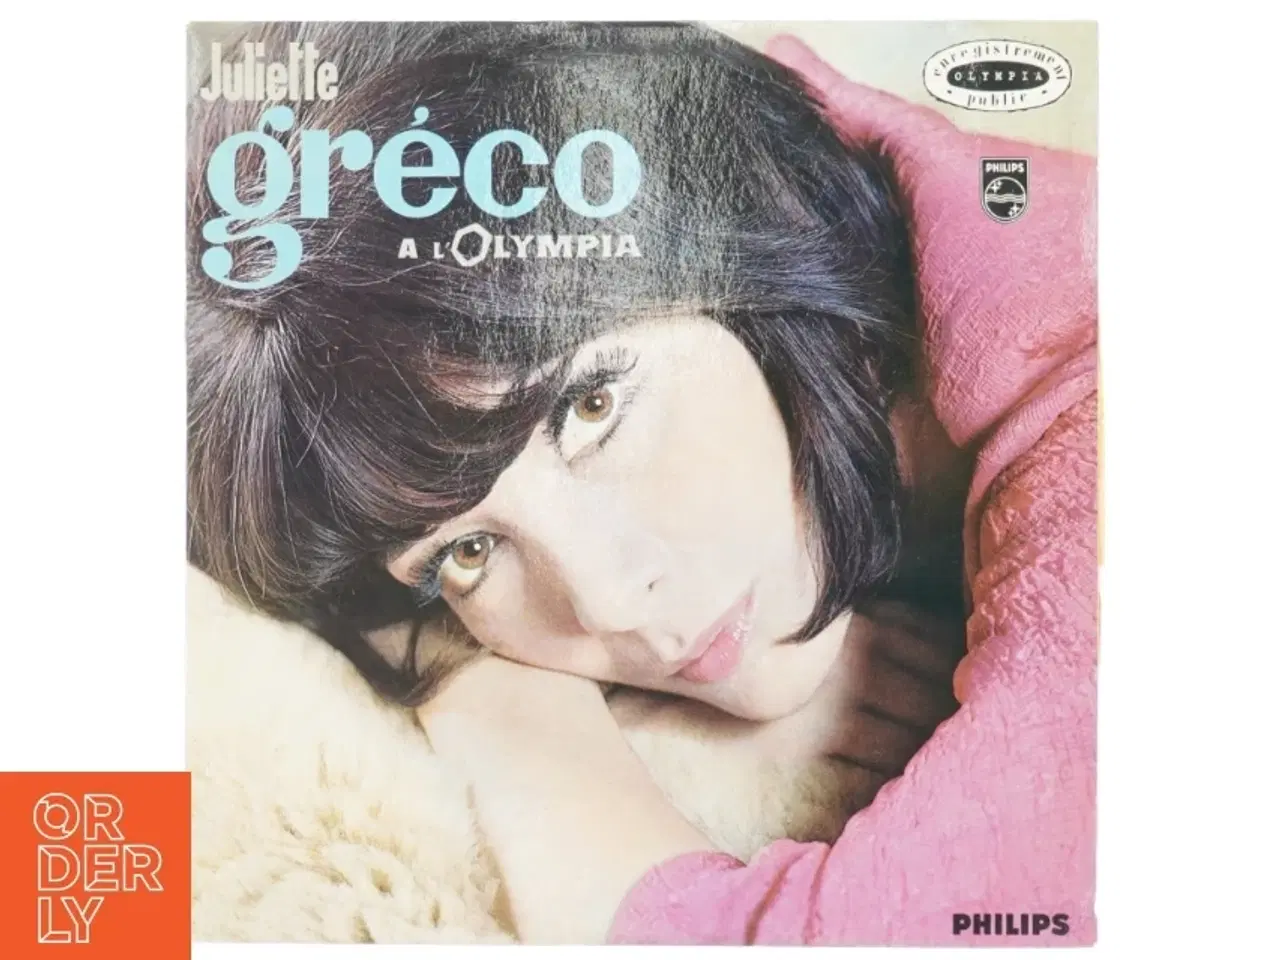 Billede 1 - Juliette Gréco vinylplade fra Philips